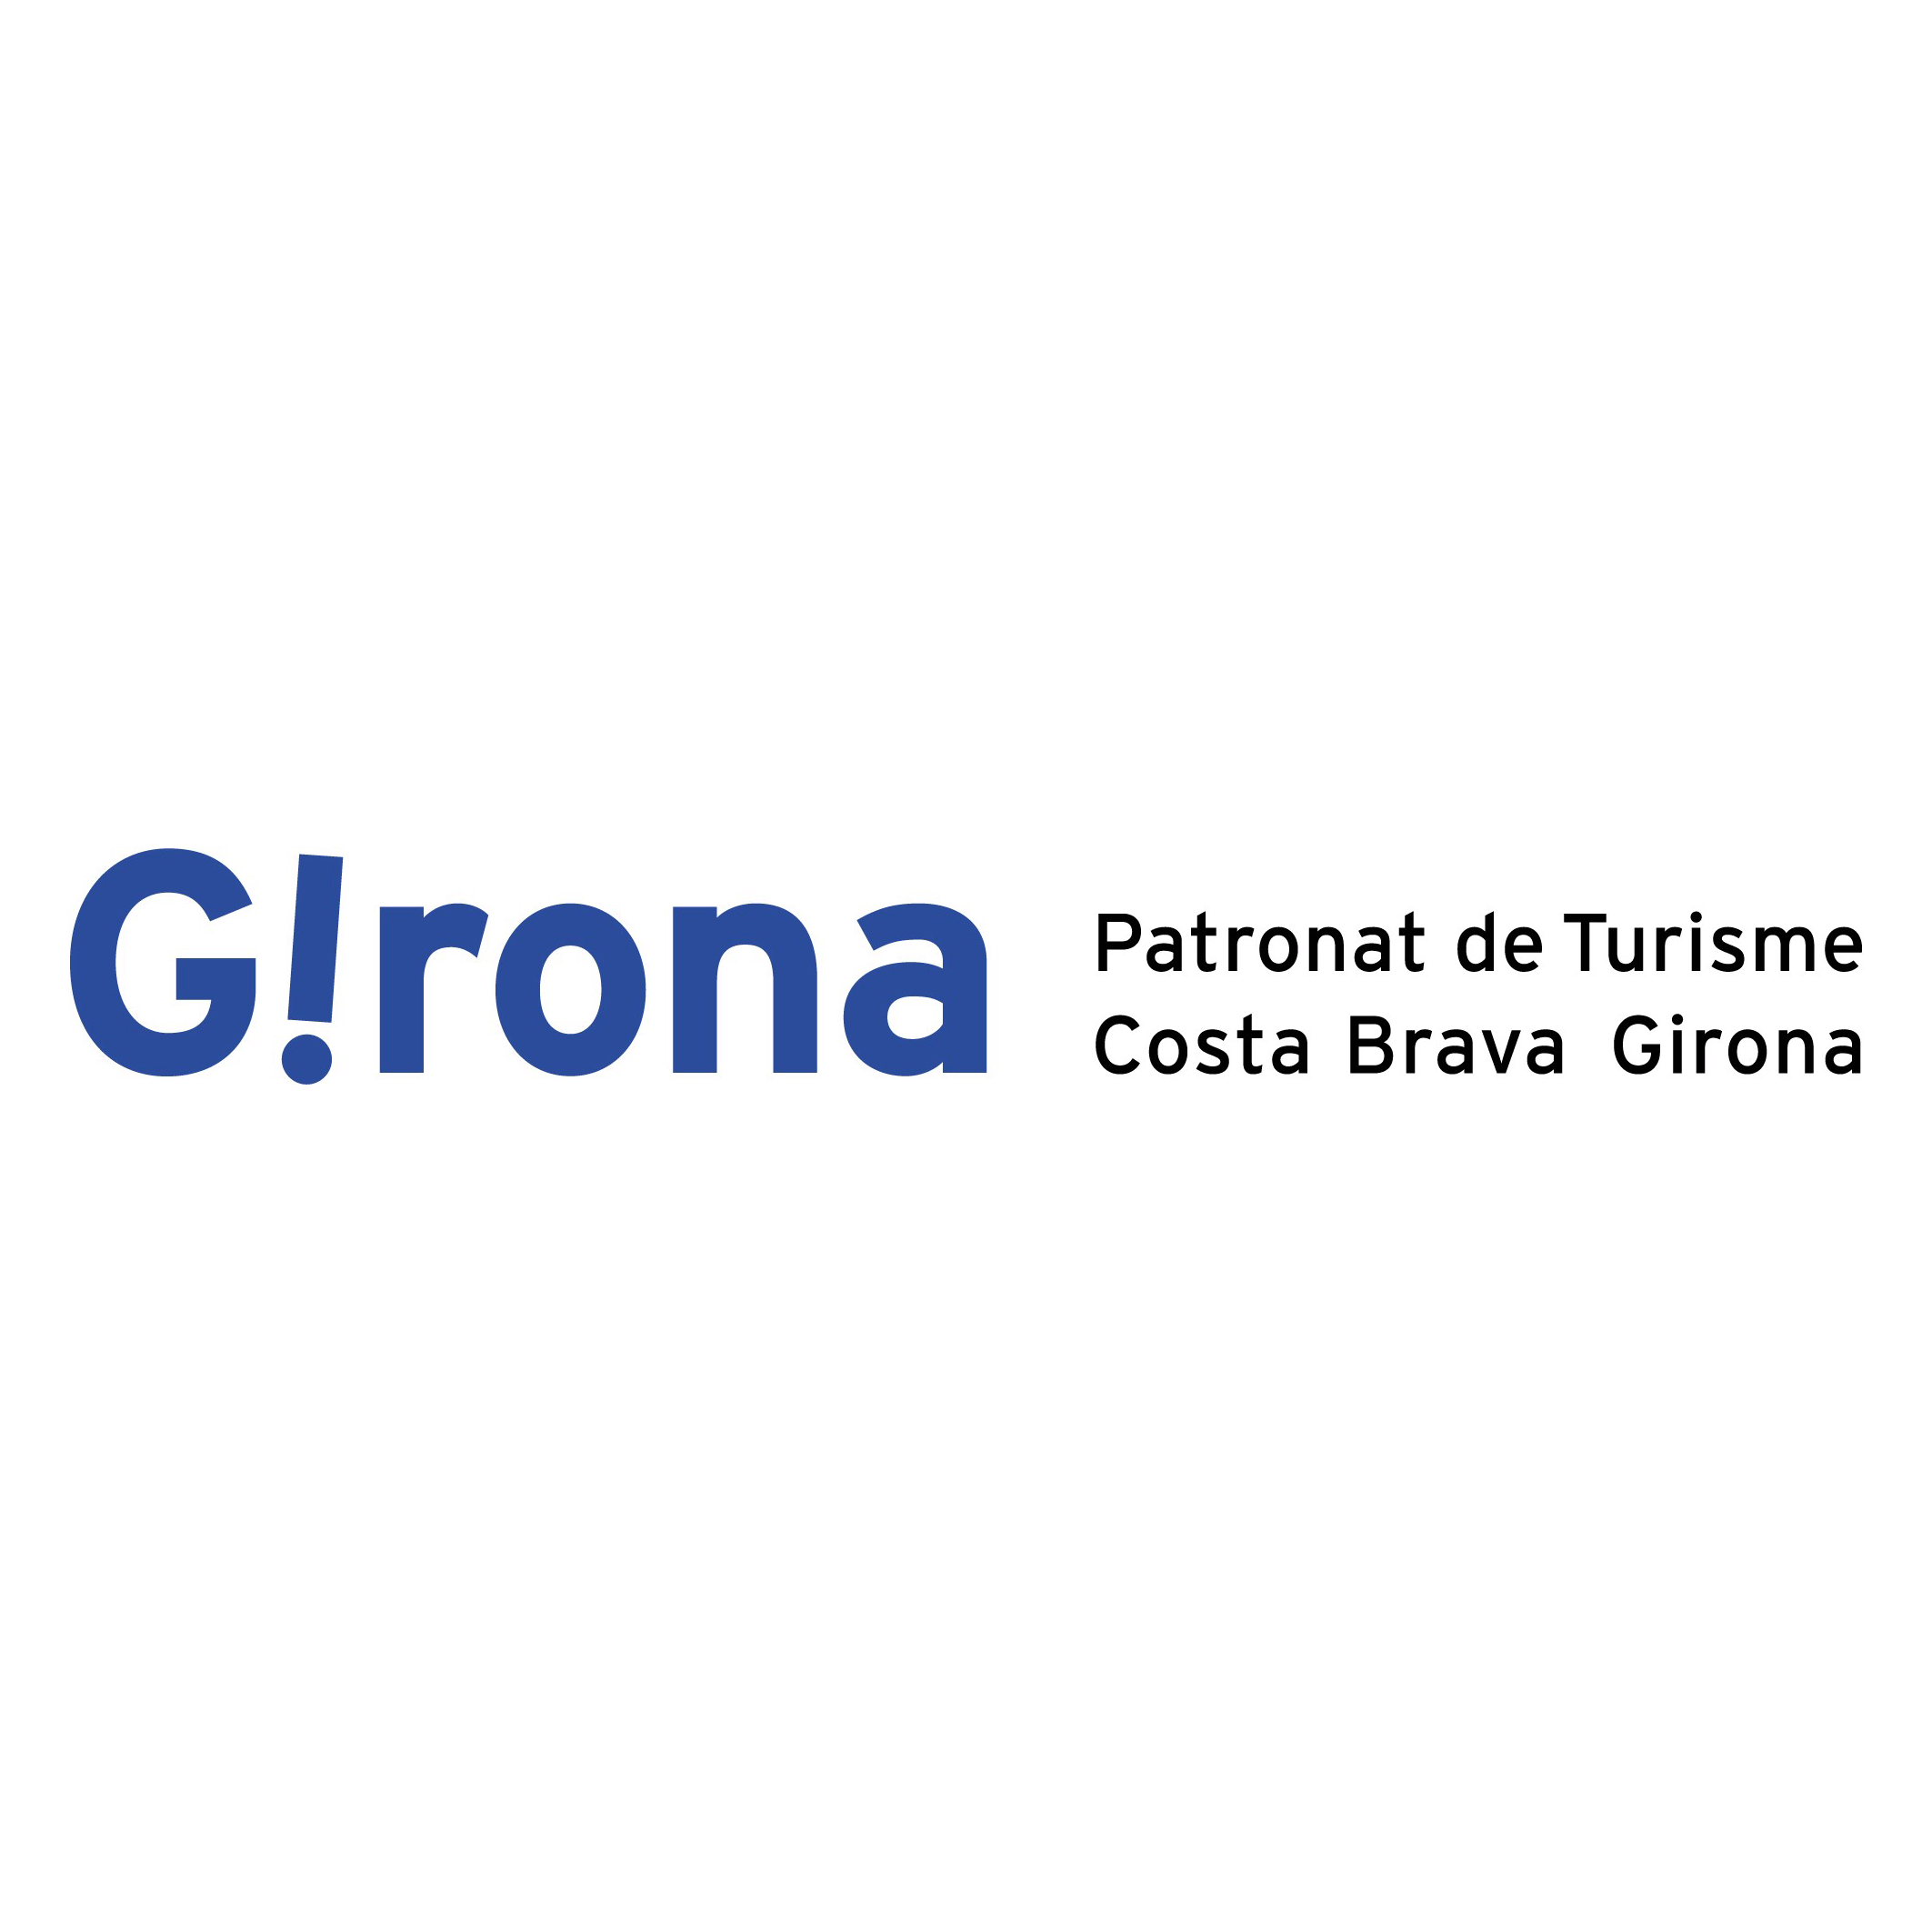 Patronat de Turisme <br>Costa Brava Girona